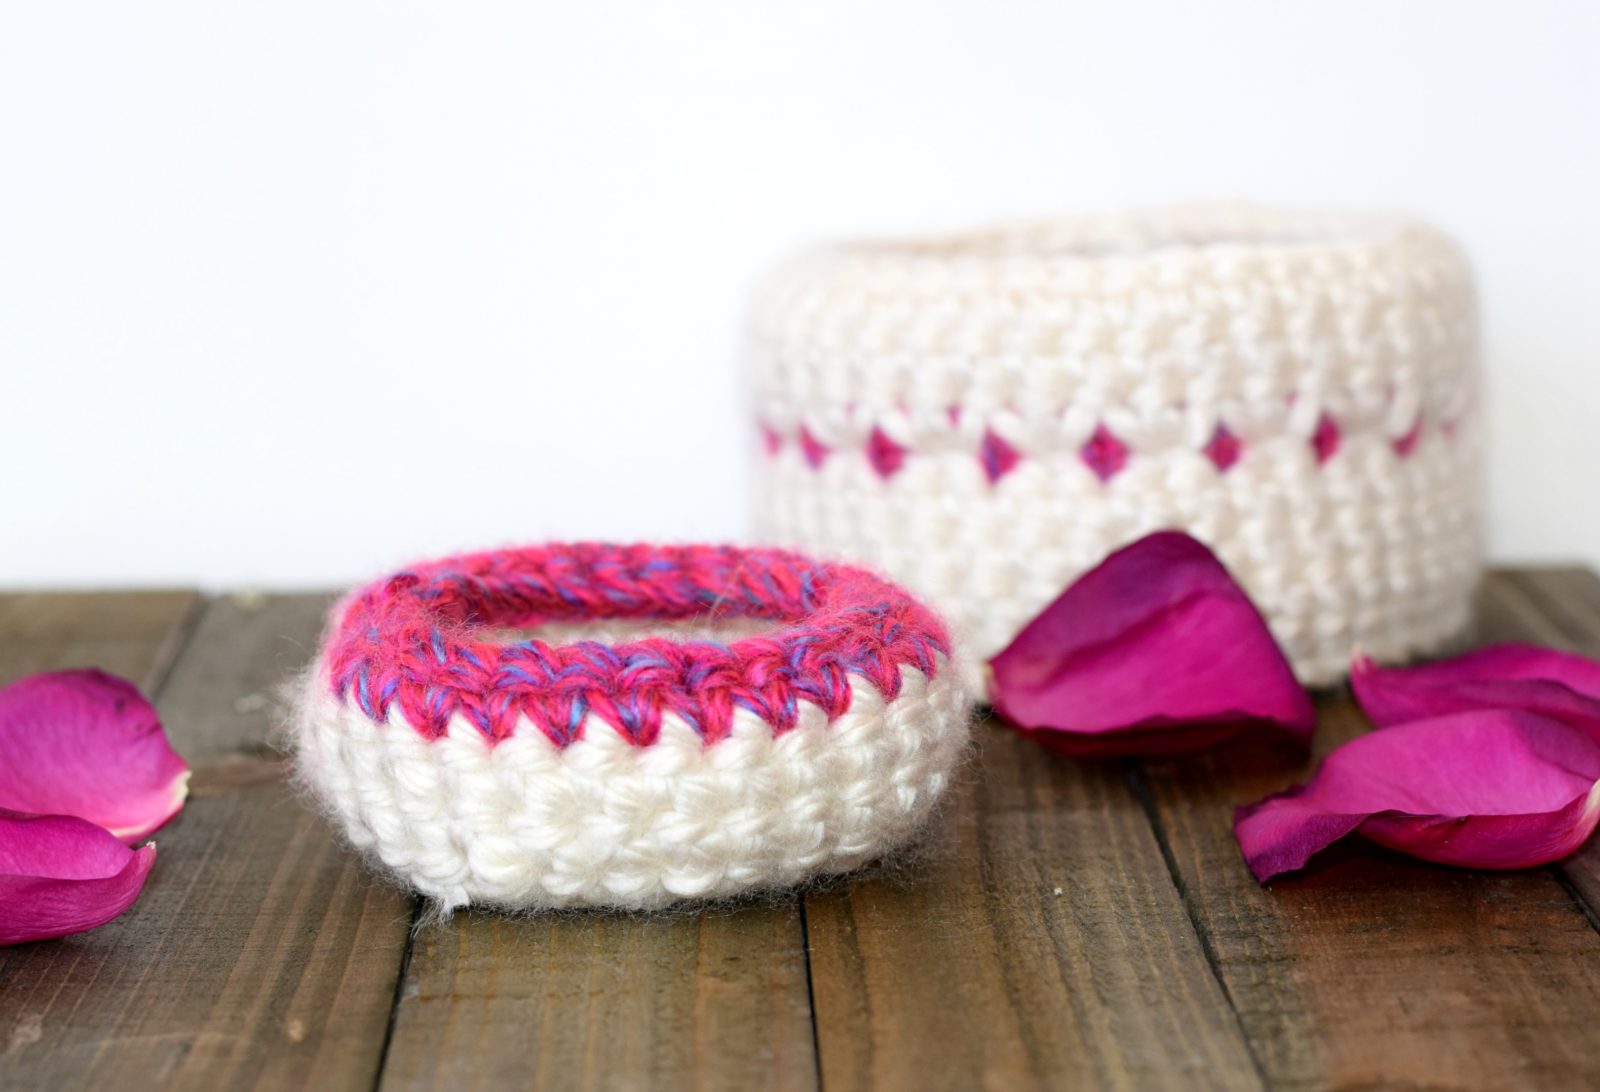 Crochet Project Bag + Yarn Basket Easy DIY Tutorial